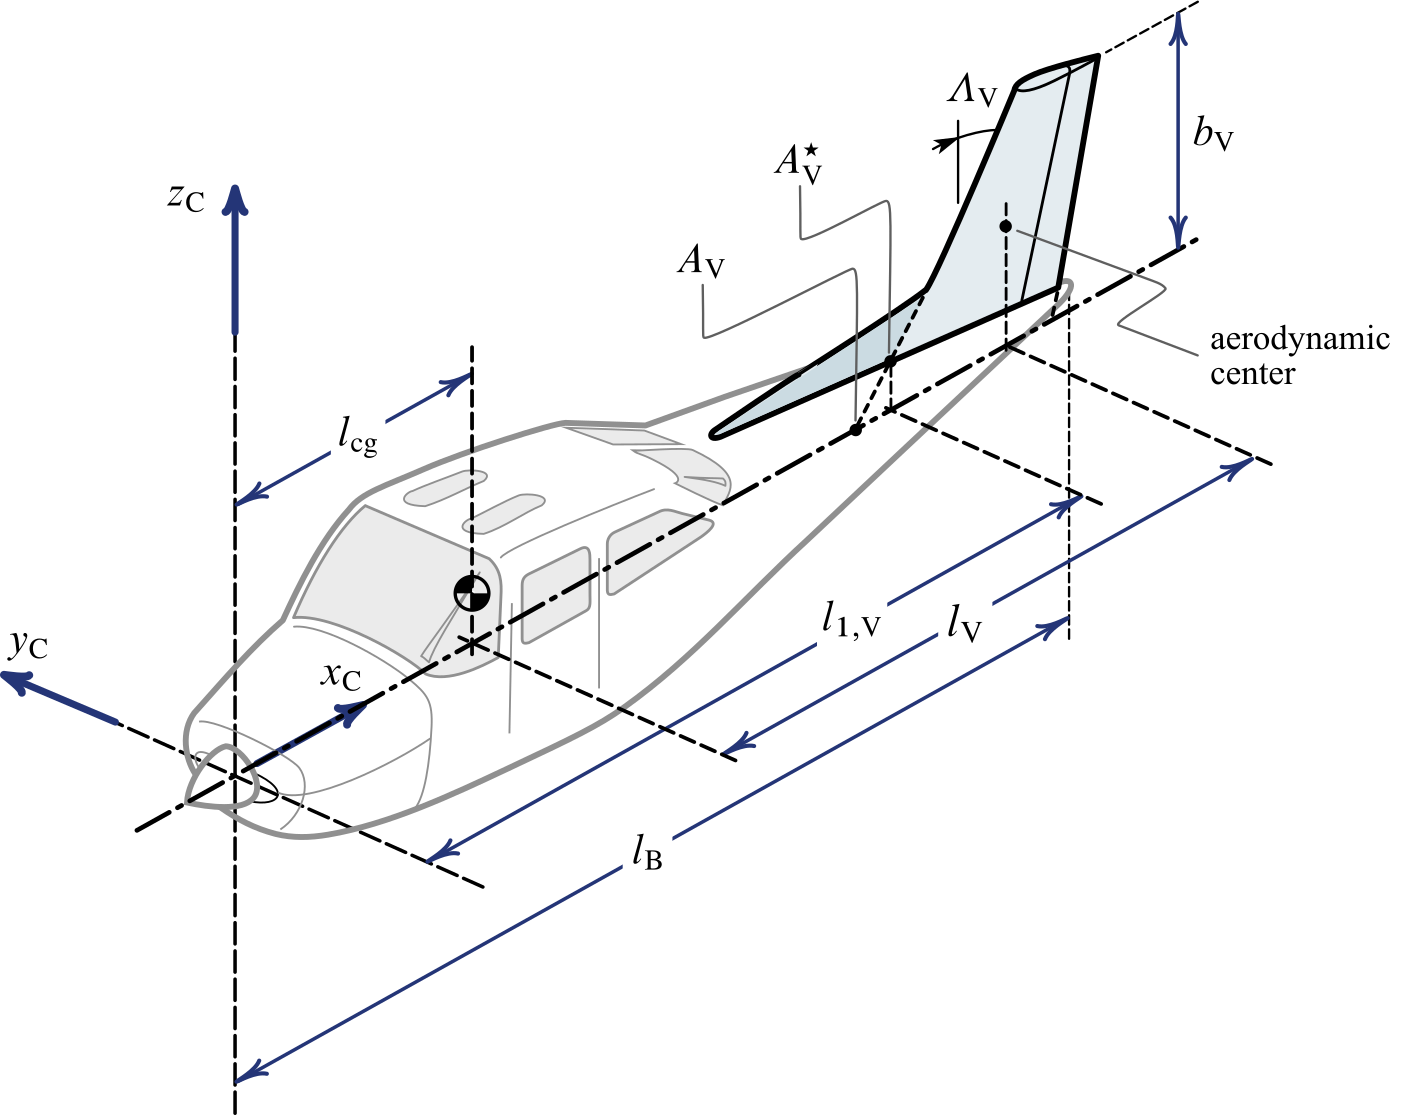 Nomenclature of the vertical tailplane.